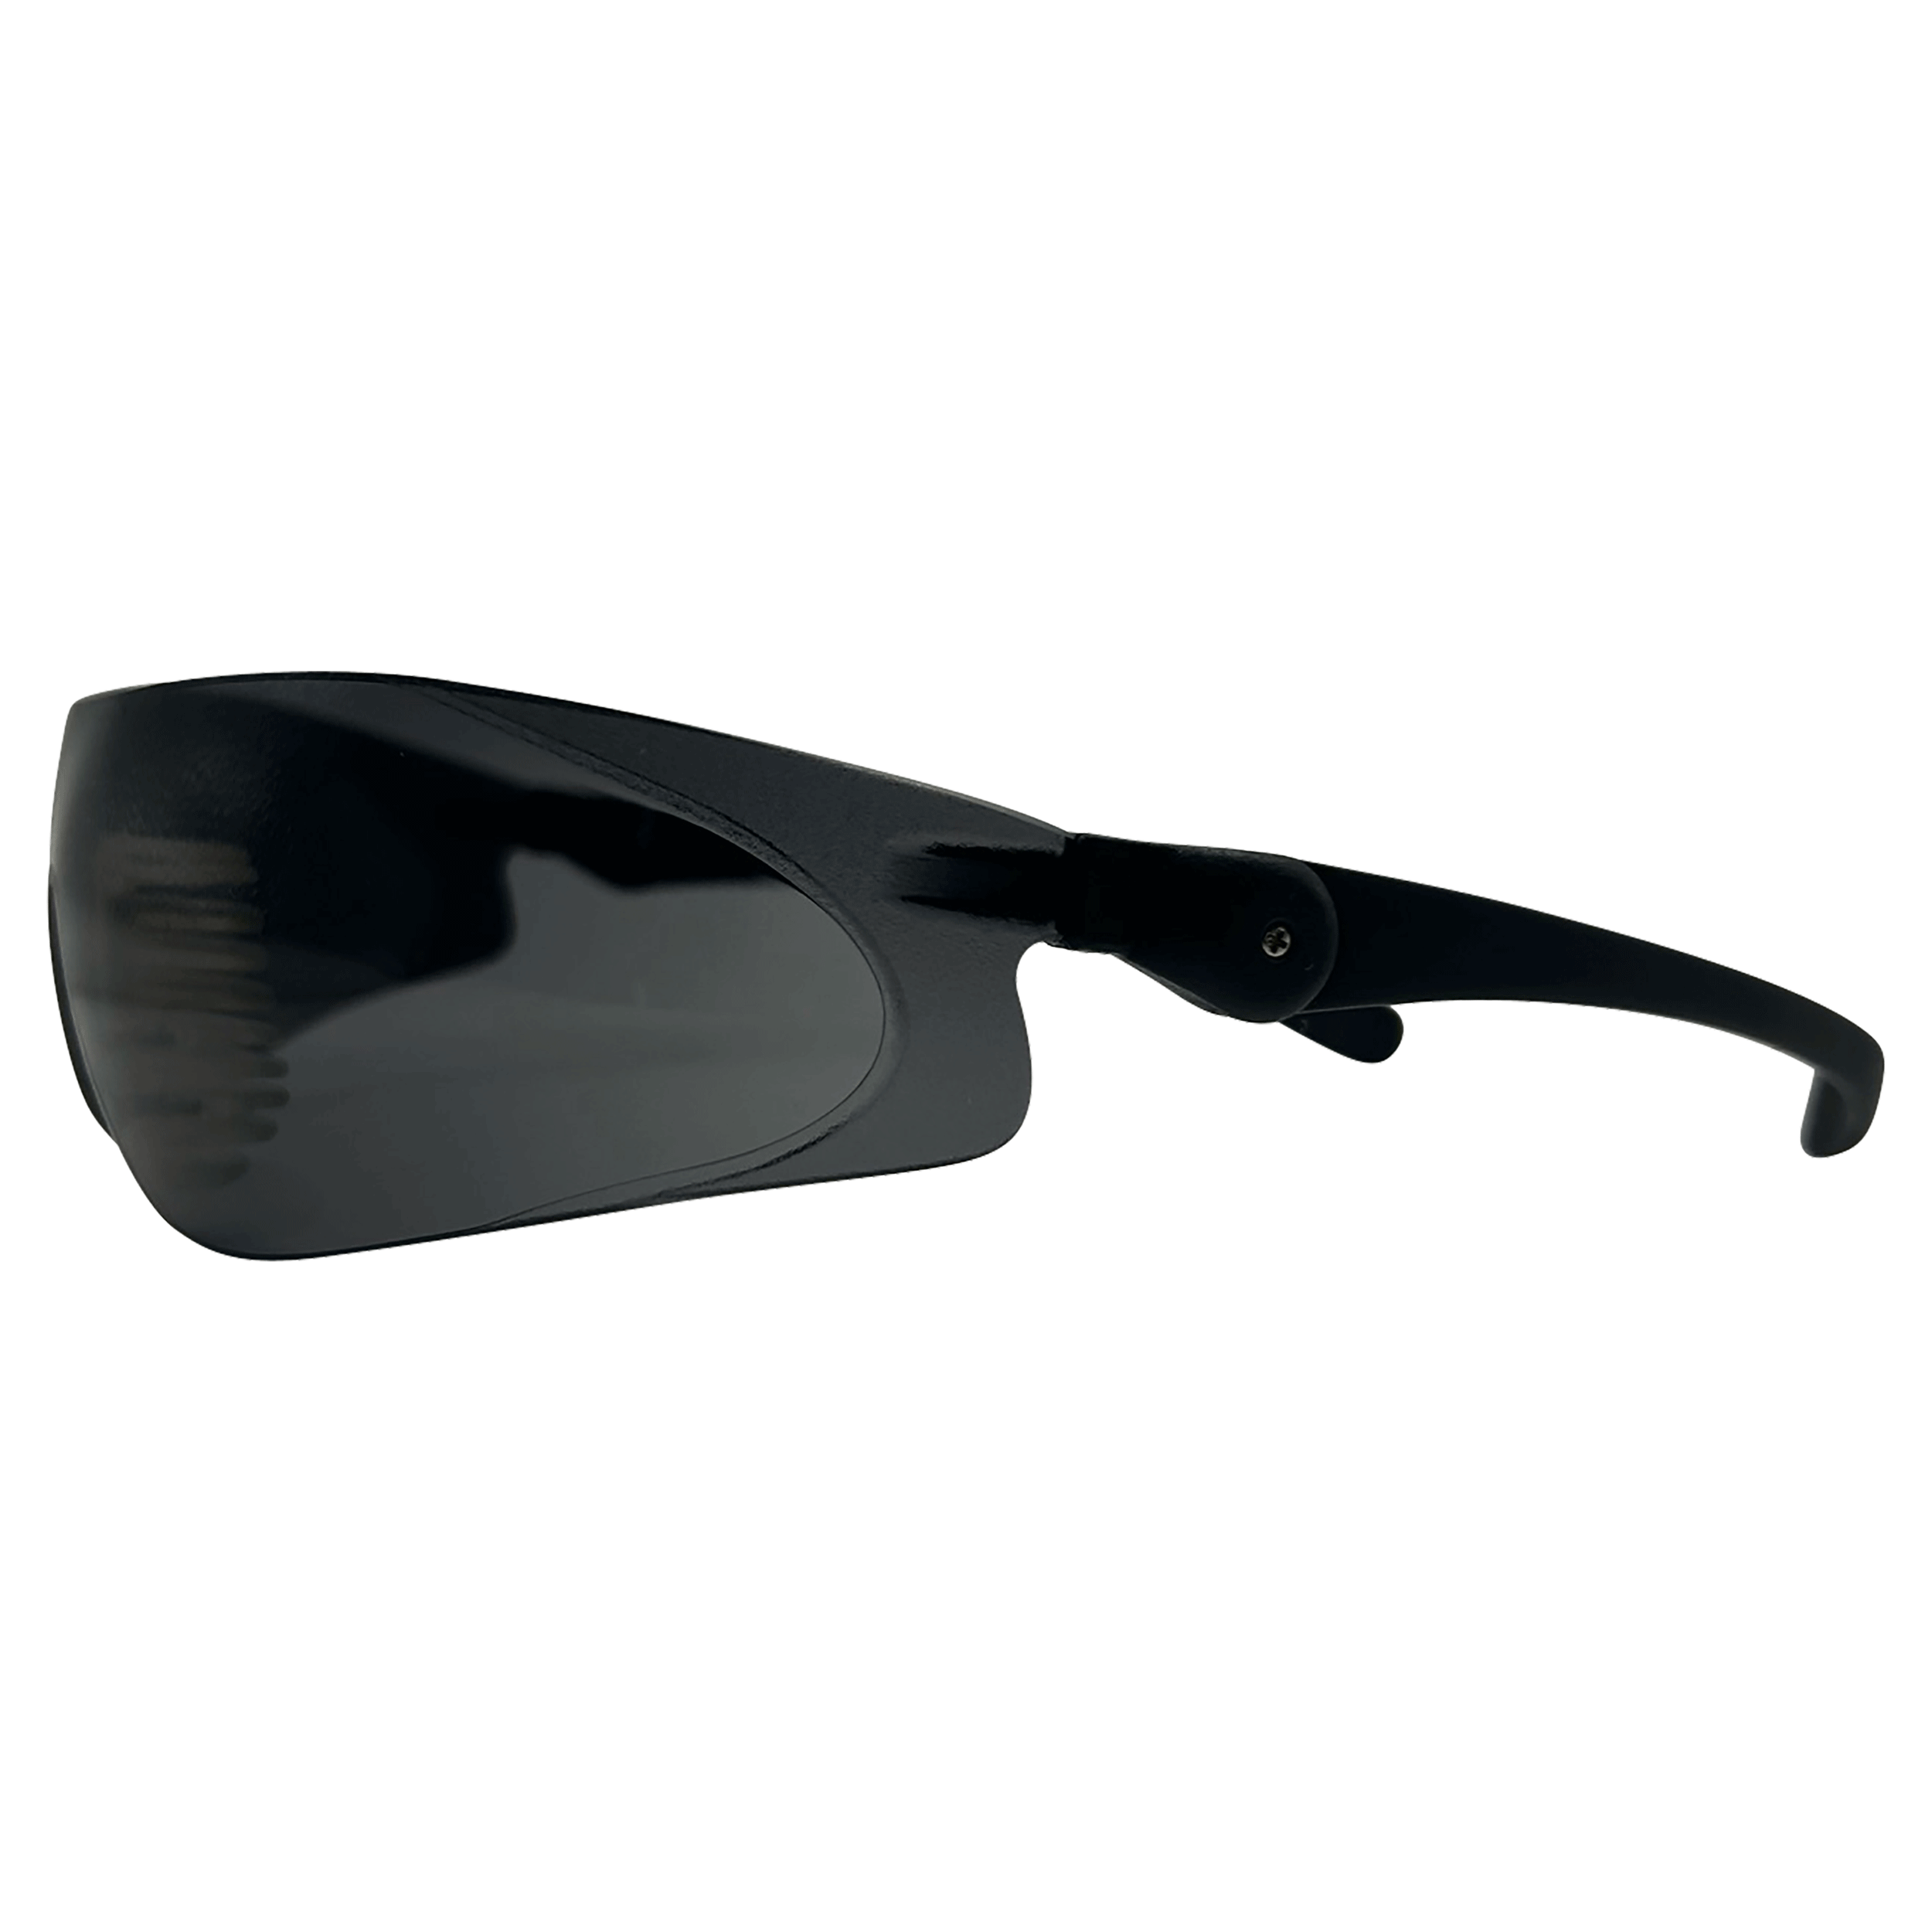 DRILL Sports Sunglasses